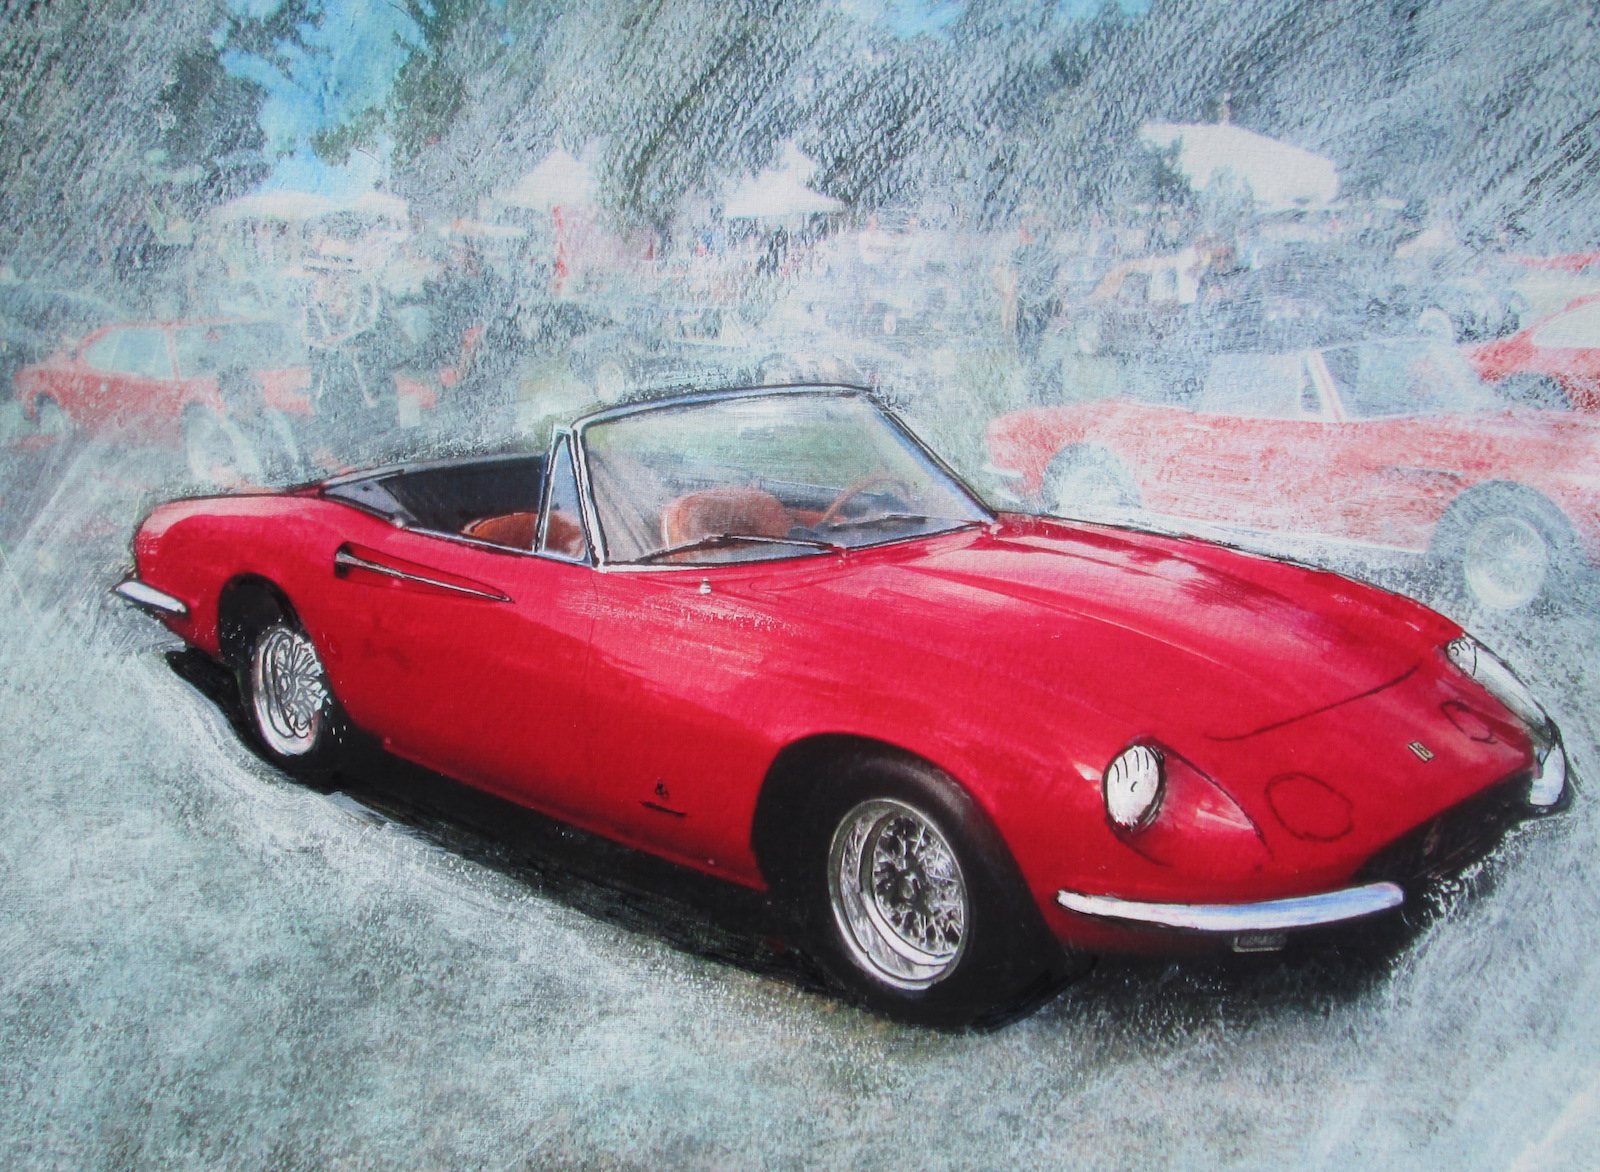 The 1967 Ferrari 365GT California Spyder